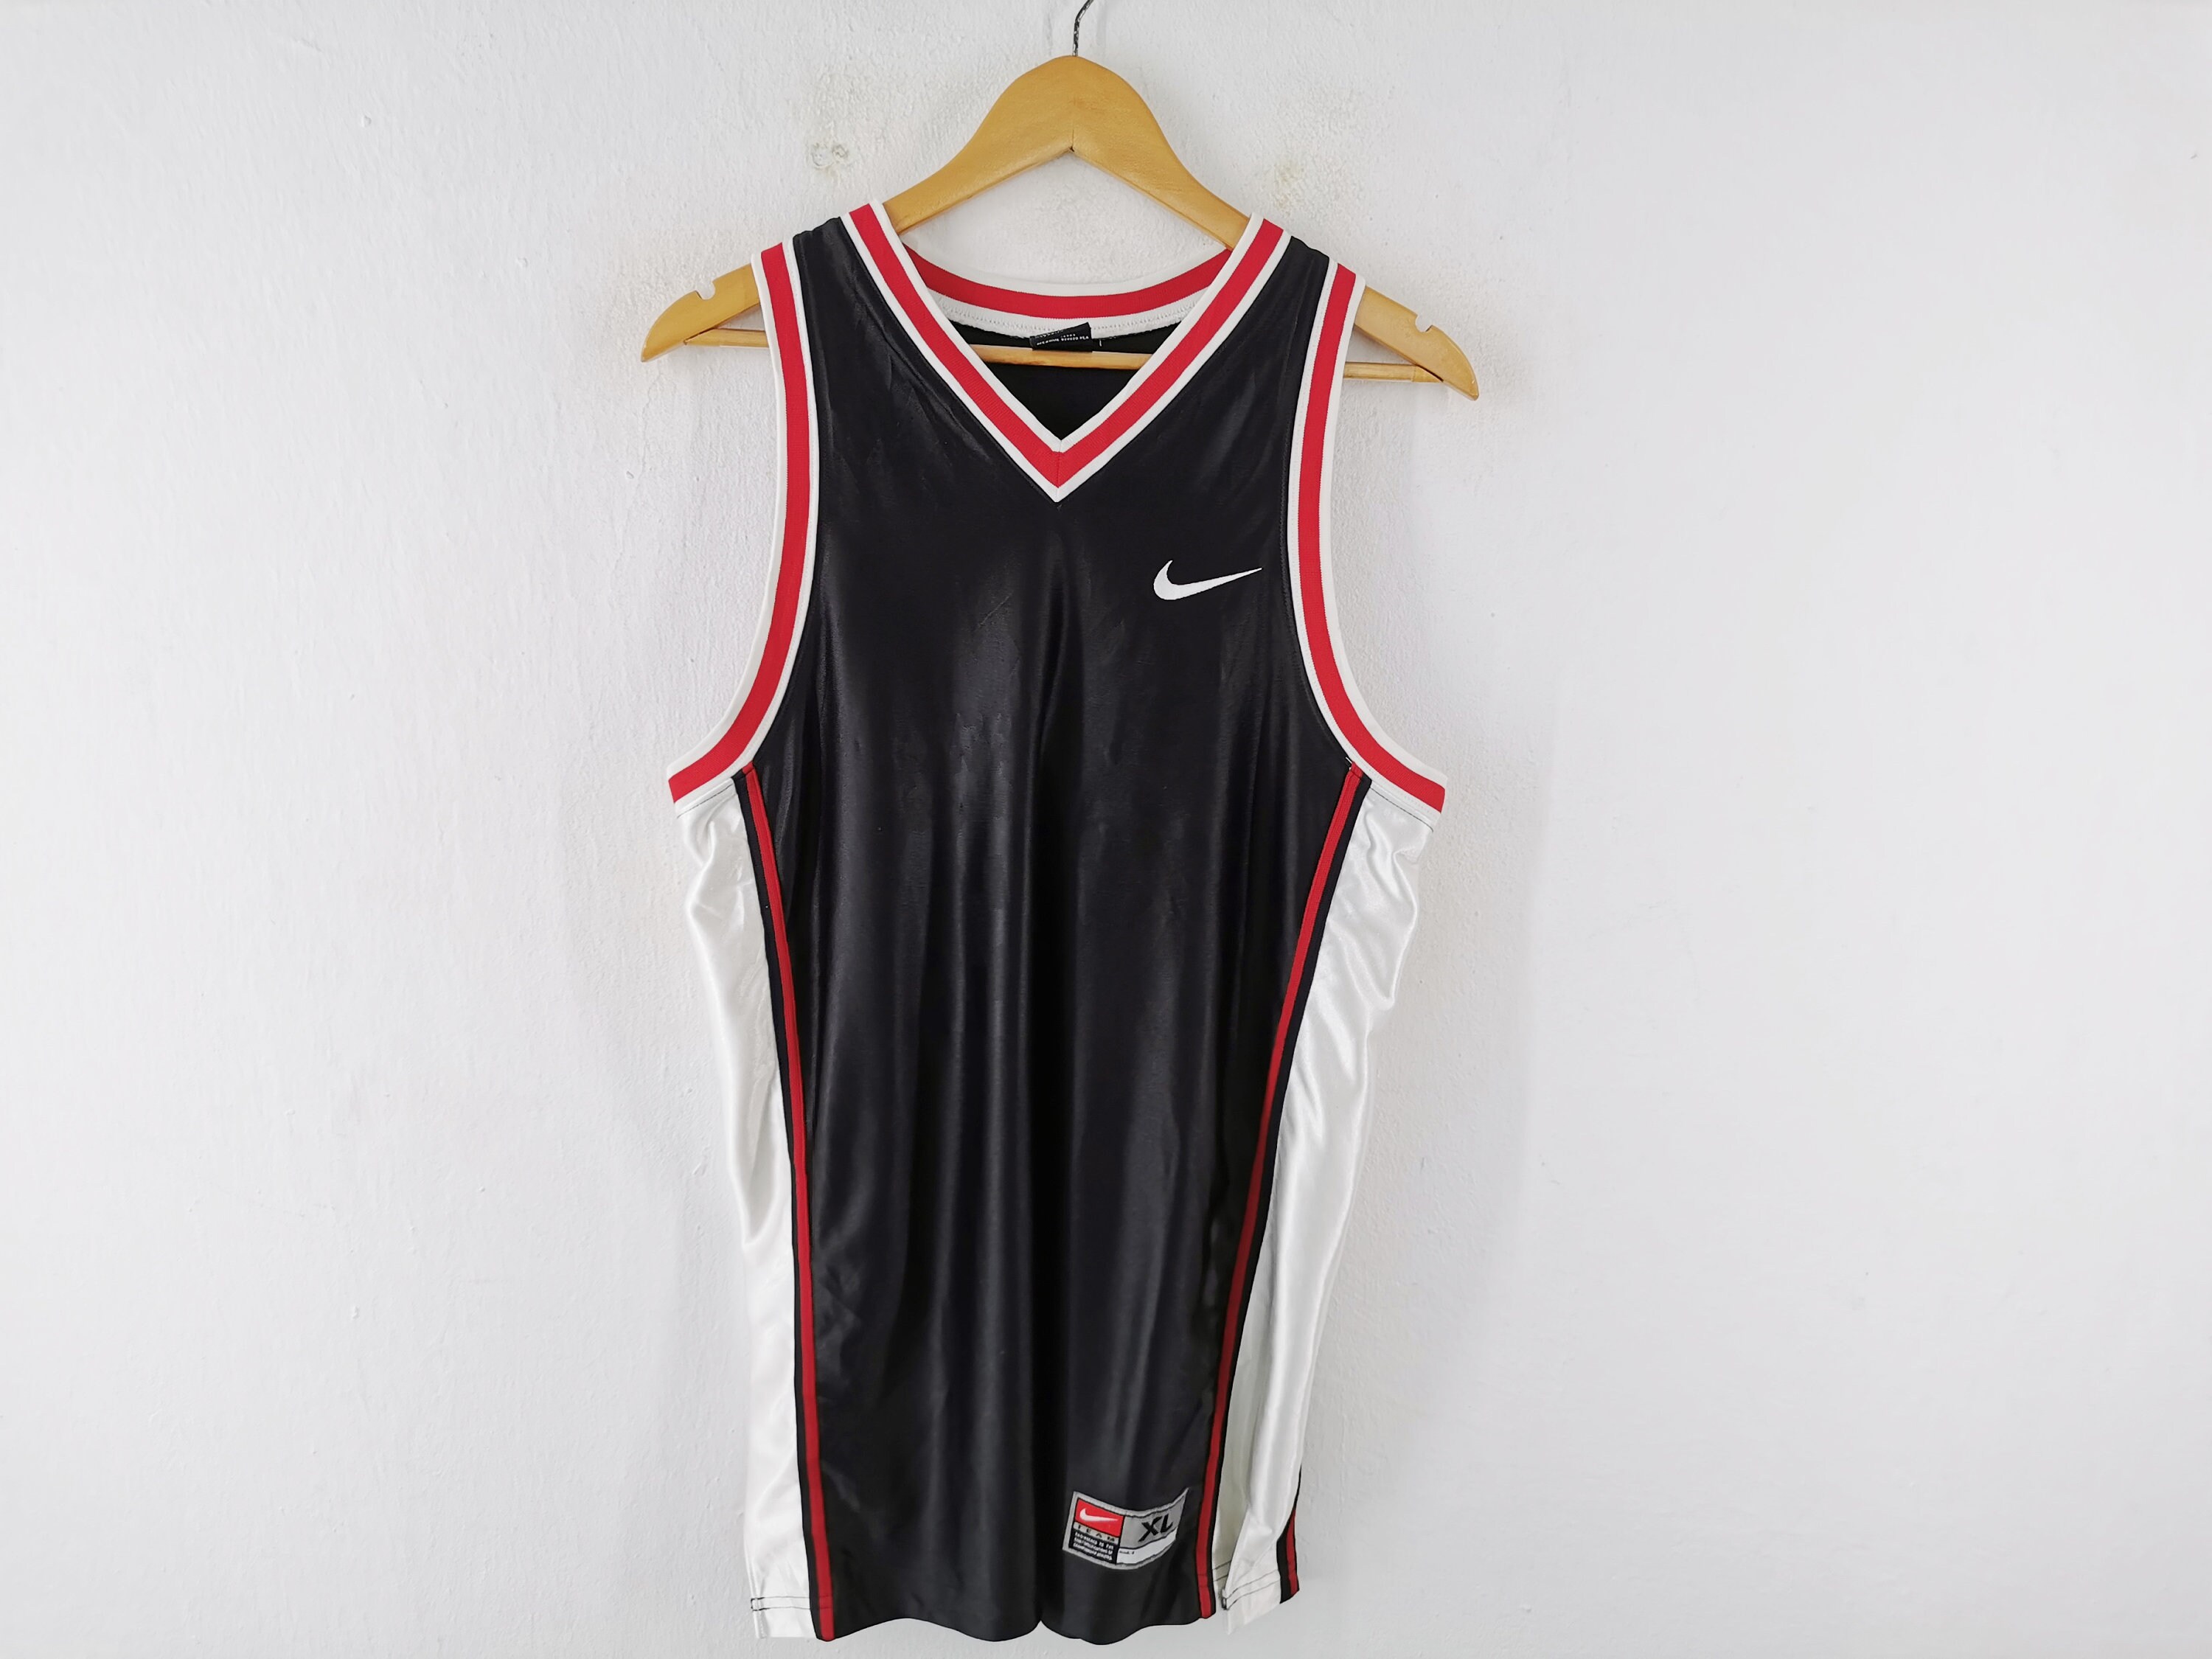 Y2K Nike Sleeveless Baseball Jersey #31 Size Medium